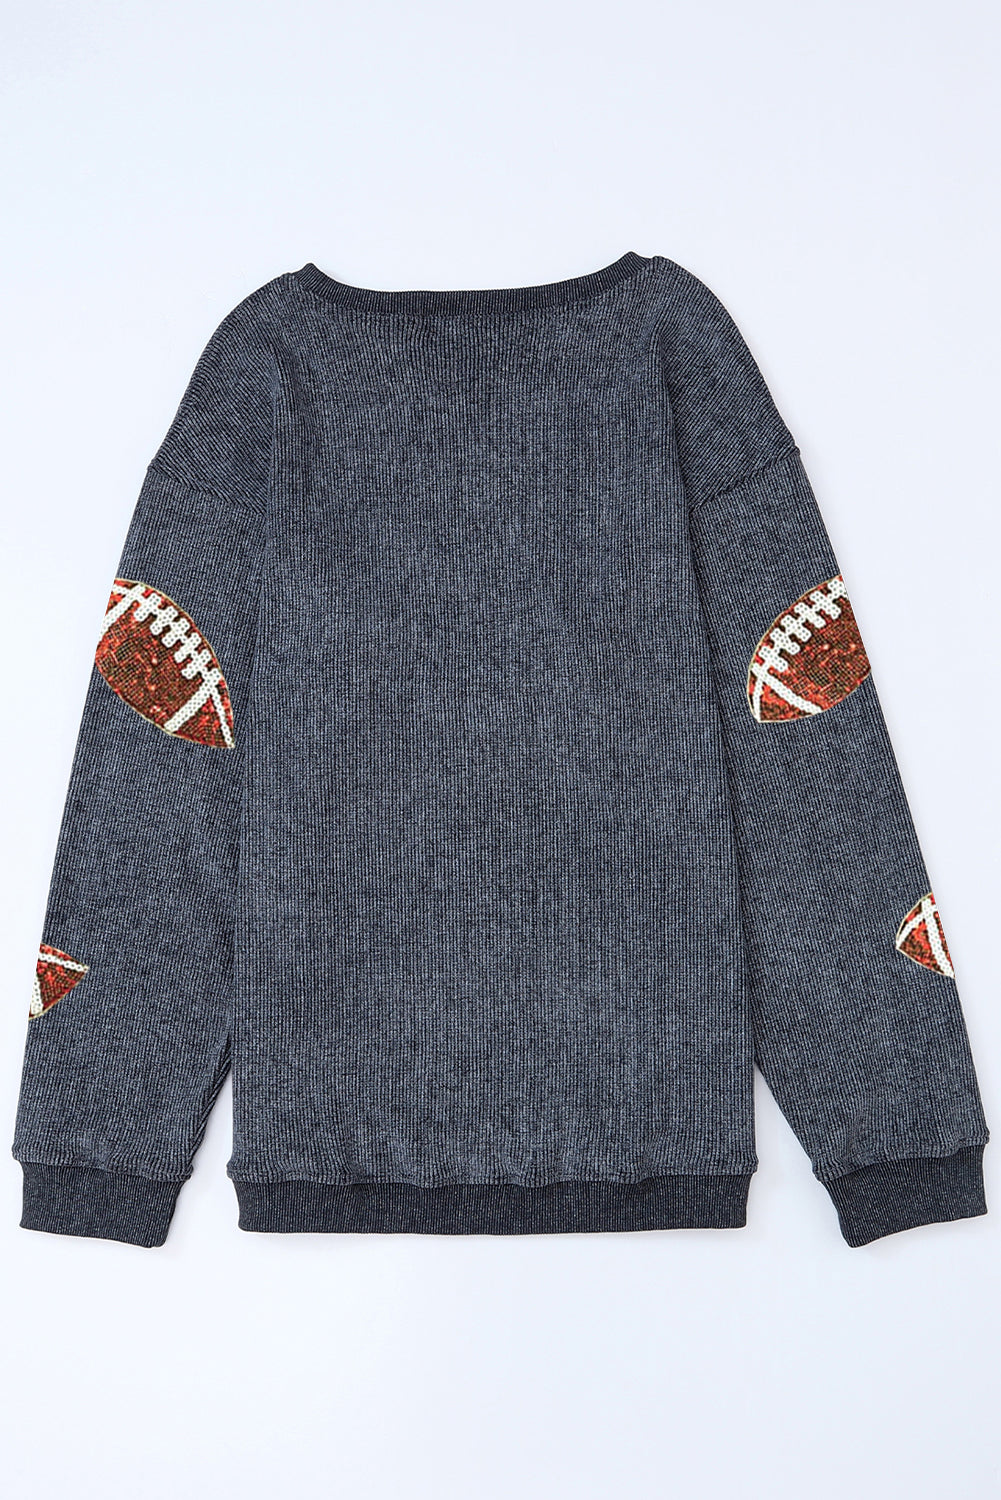 Gray Sequin Rugby Graphic Corded Baggy Sweatshirt Graphic Sweatshirts JT's Designer Fashion